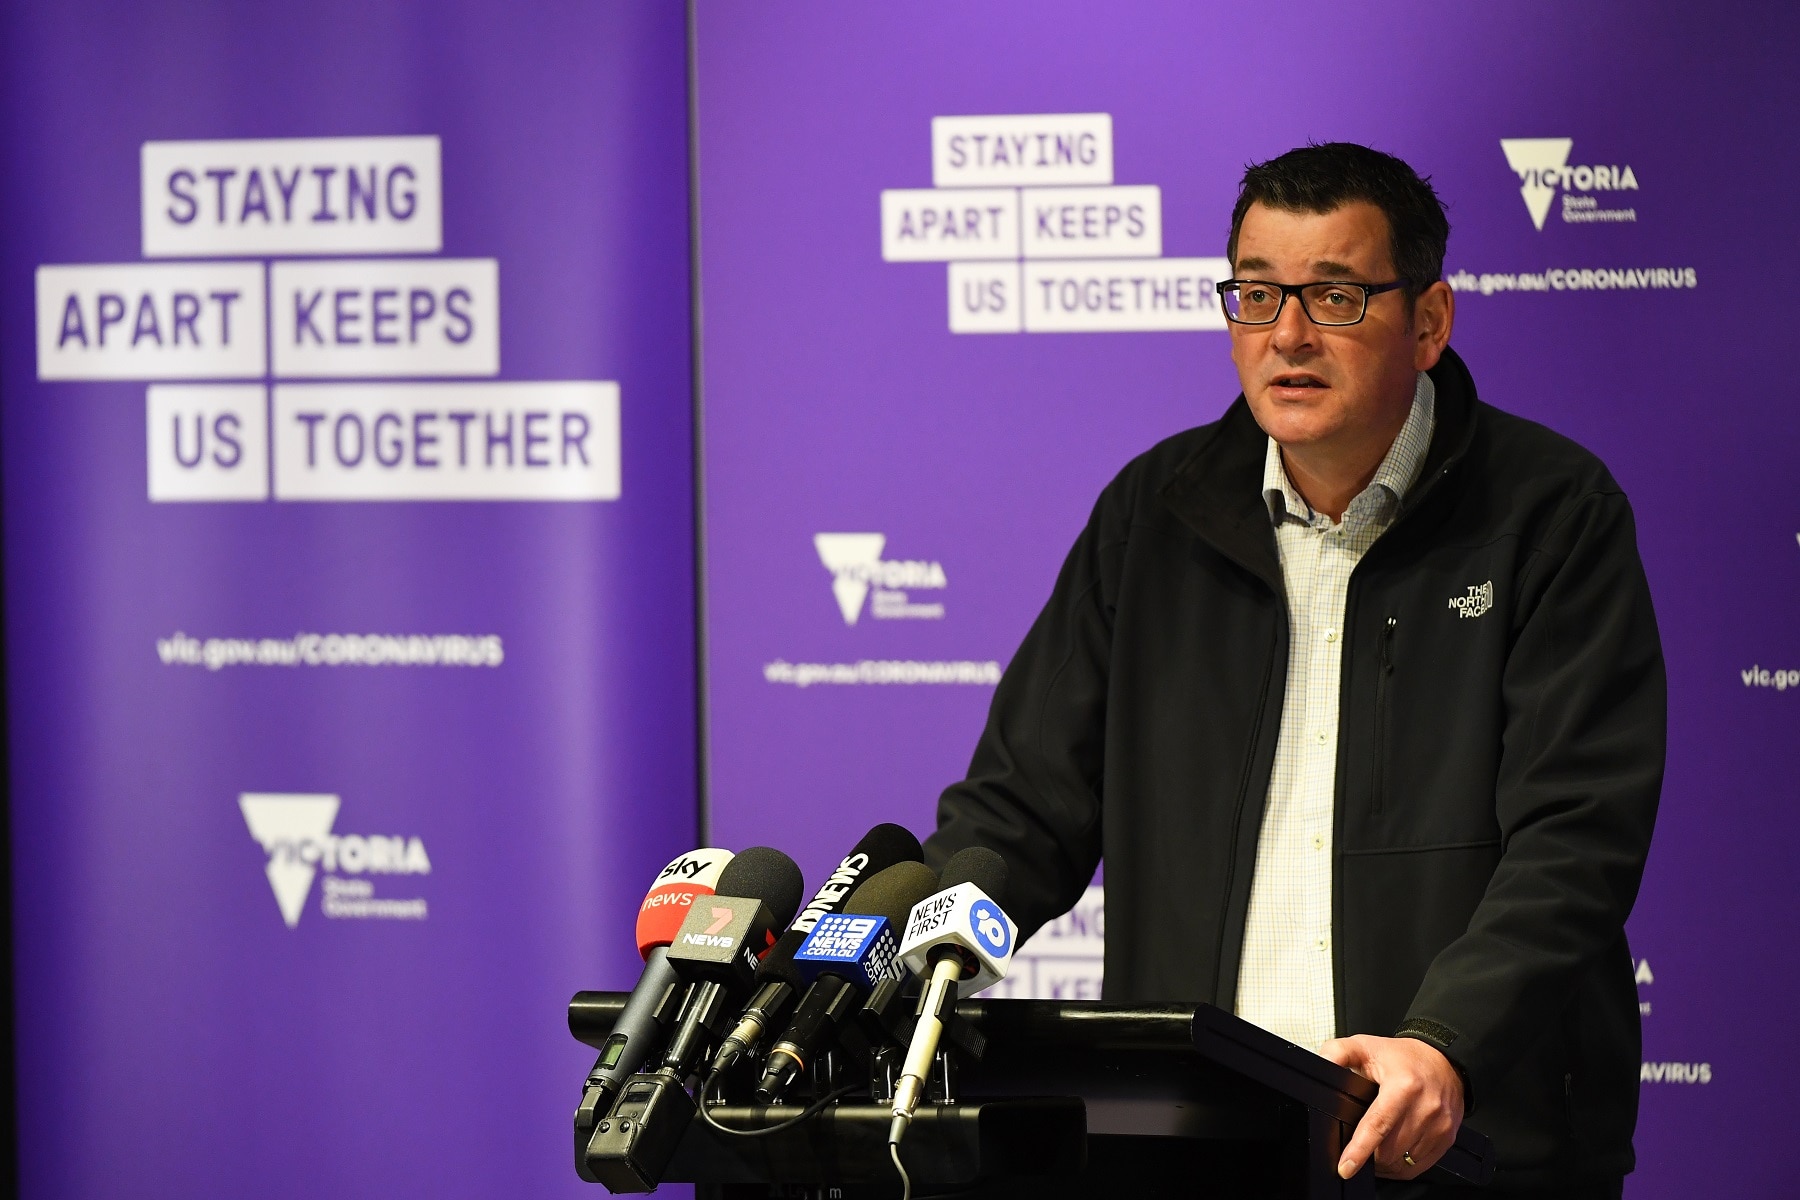 Victorian Premier Daniel Andrews announces the border closure